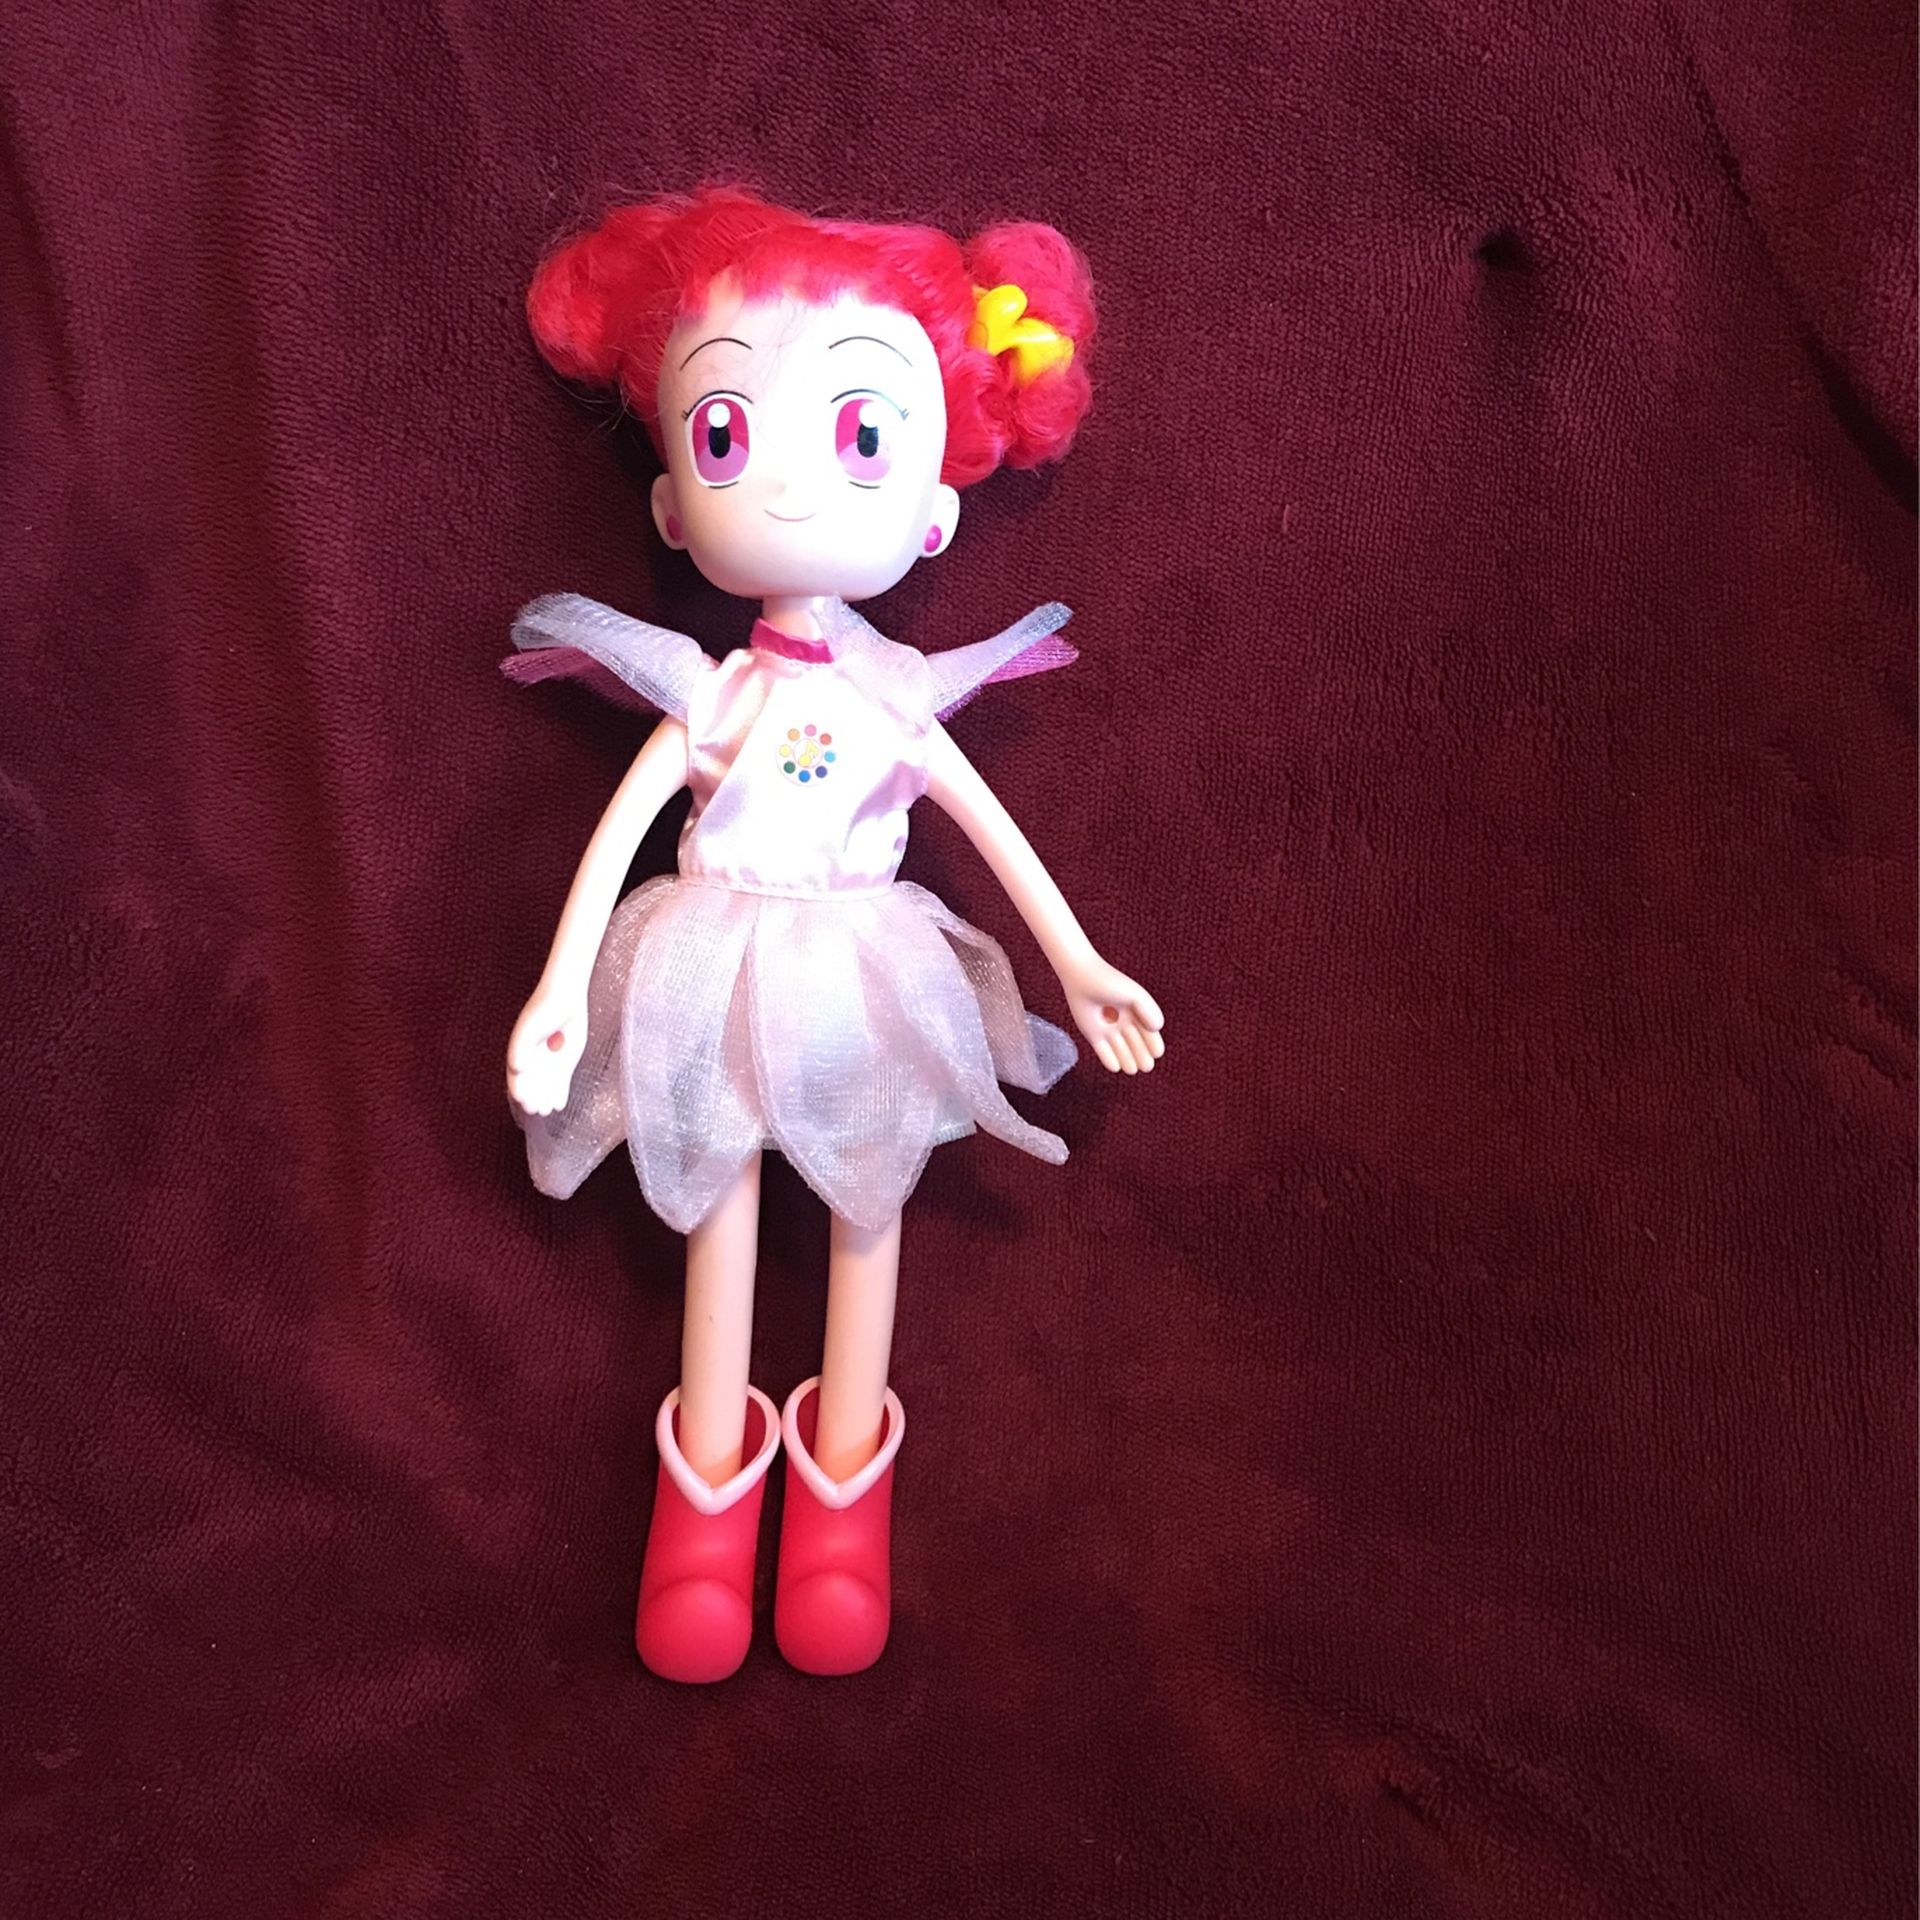 Toei Animation Co. Doremi Girl Anime Doll 10" Talking Pink